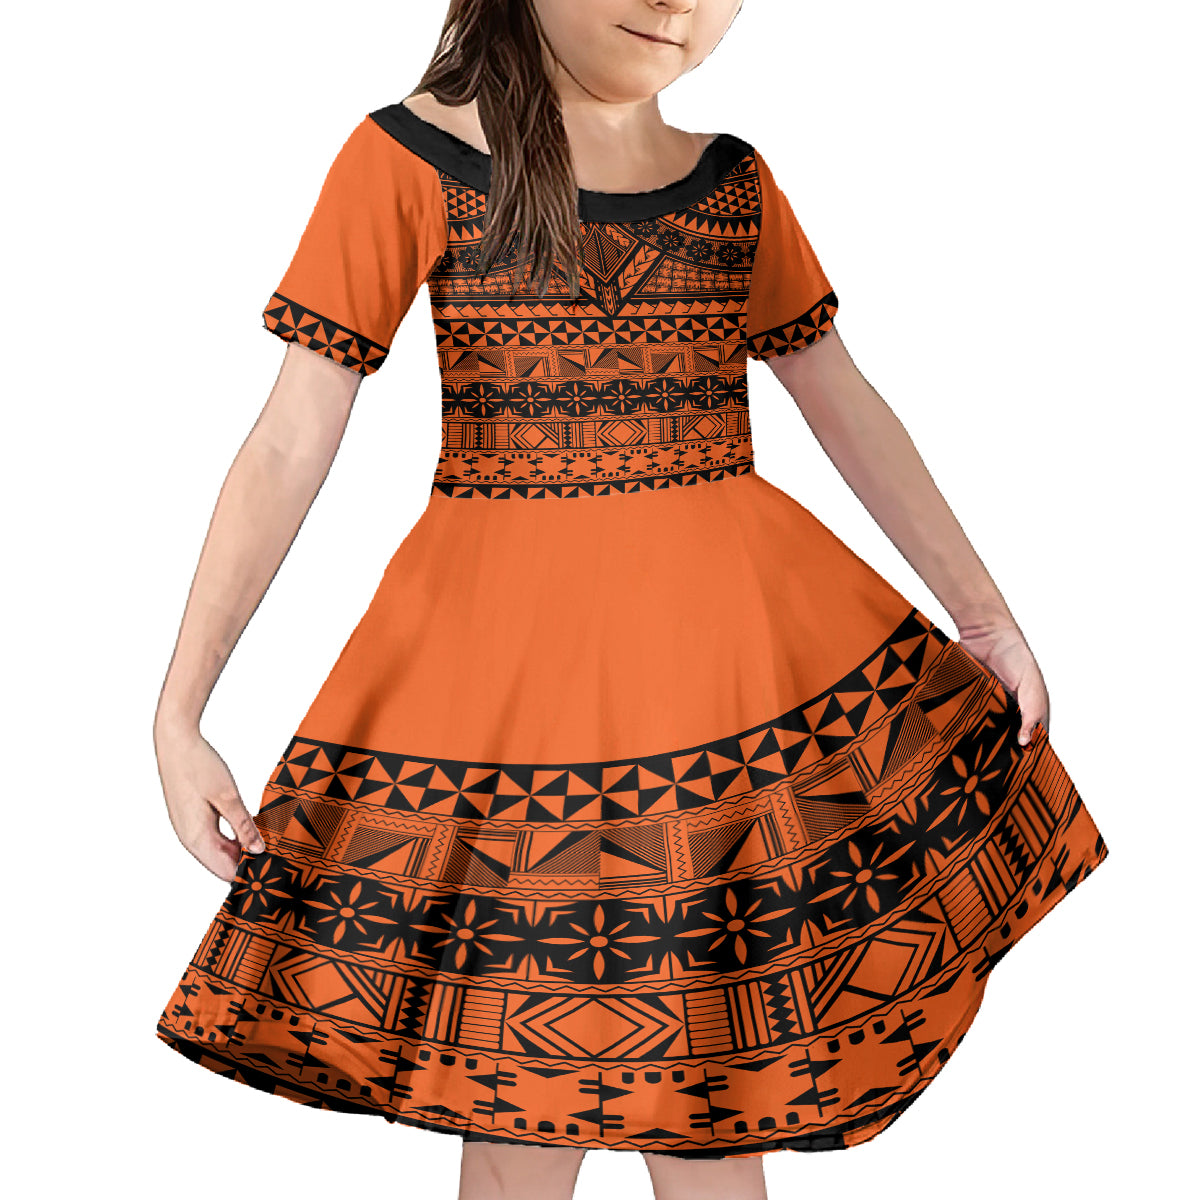 Halo Olaketa Solomon Islands Kid Short Sleeve Dress Melanesian Tribal Pattern Orange Version LT14 KID Orange - Polynesian Pride